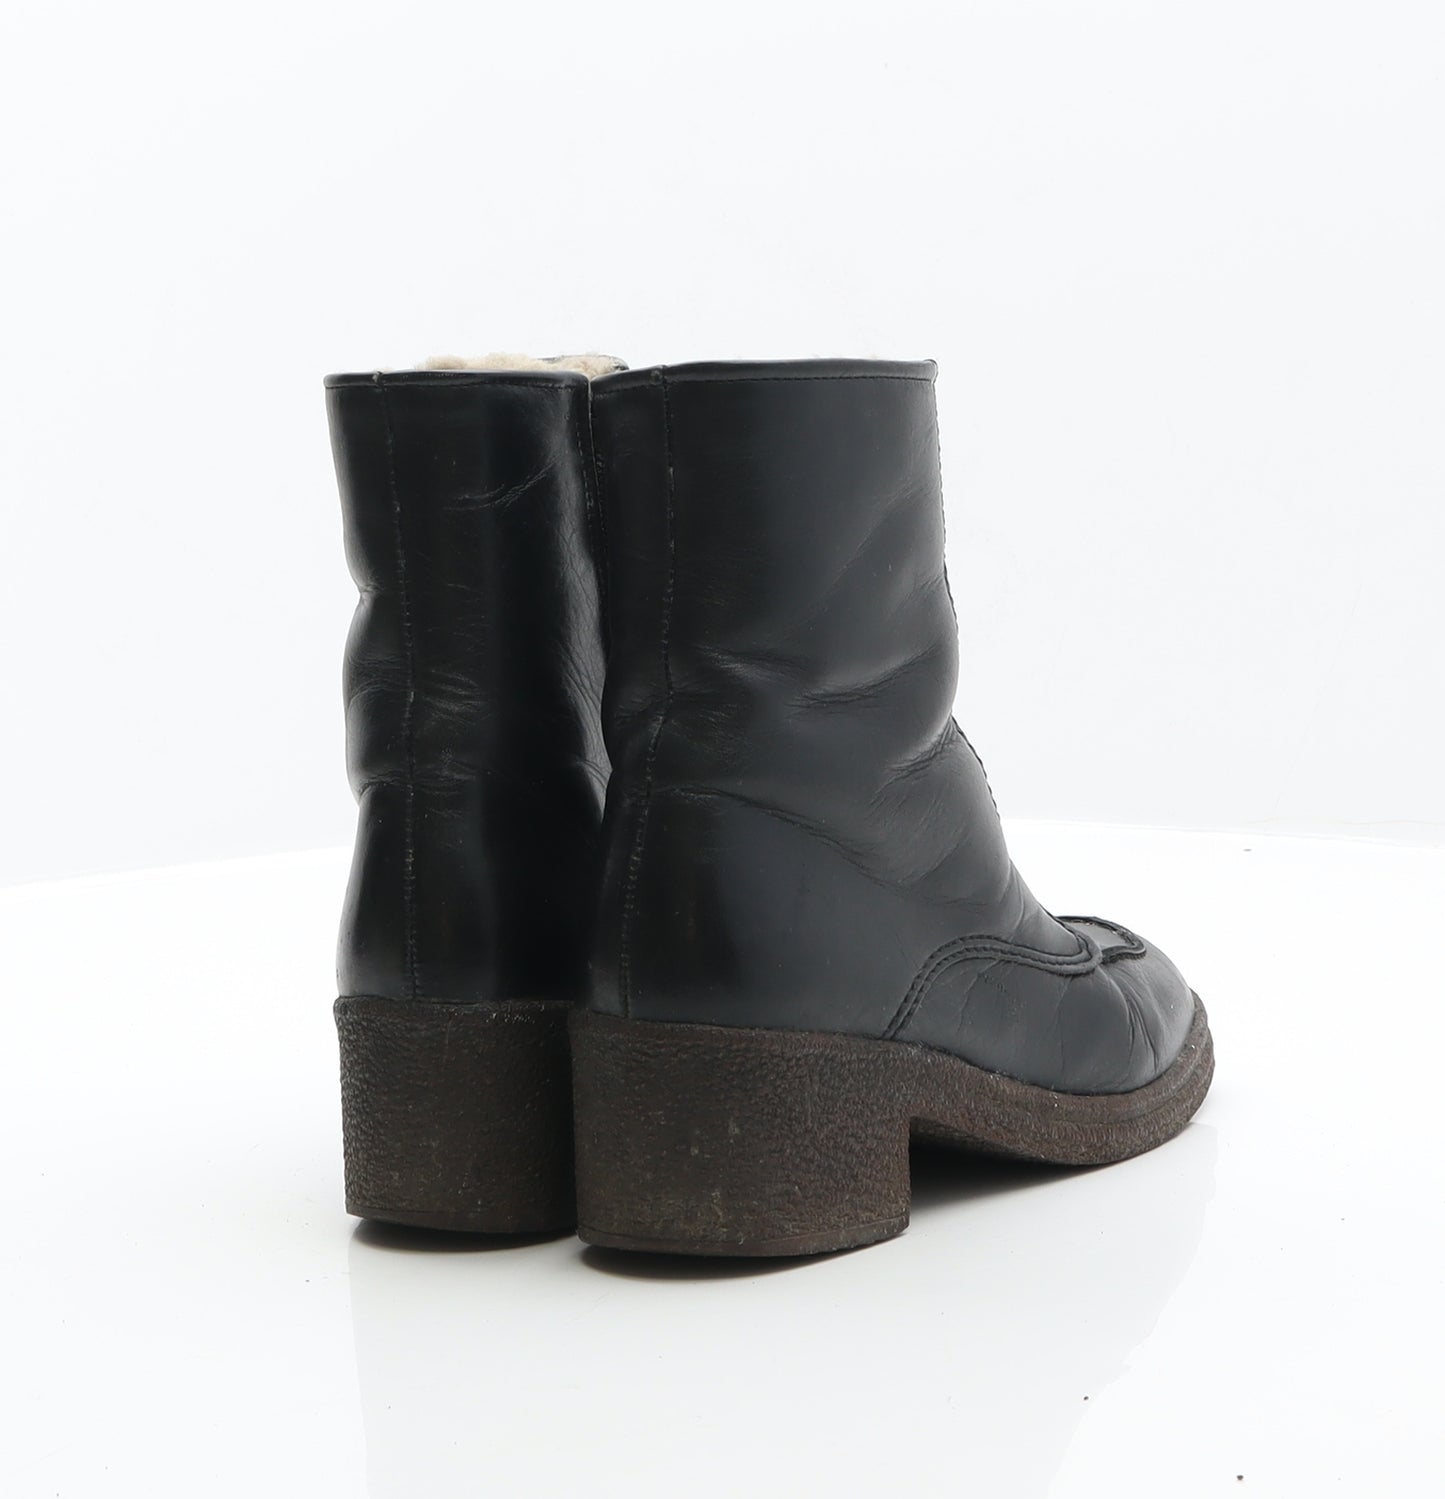 Preworn Womens Black Leather Bootie Boot UK 3